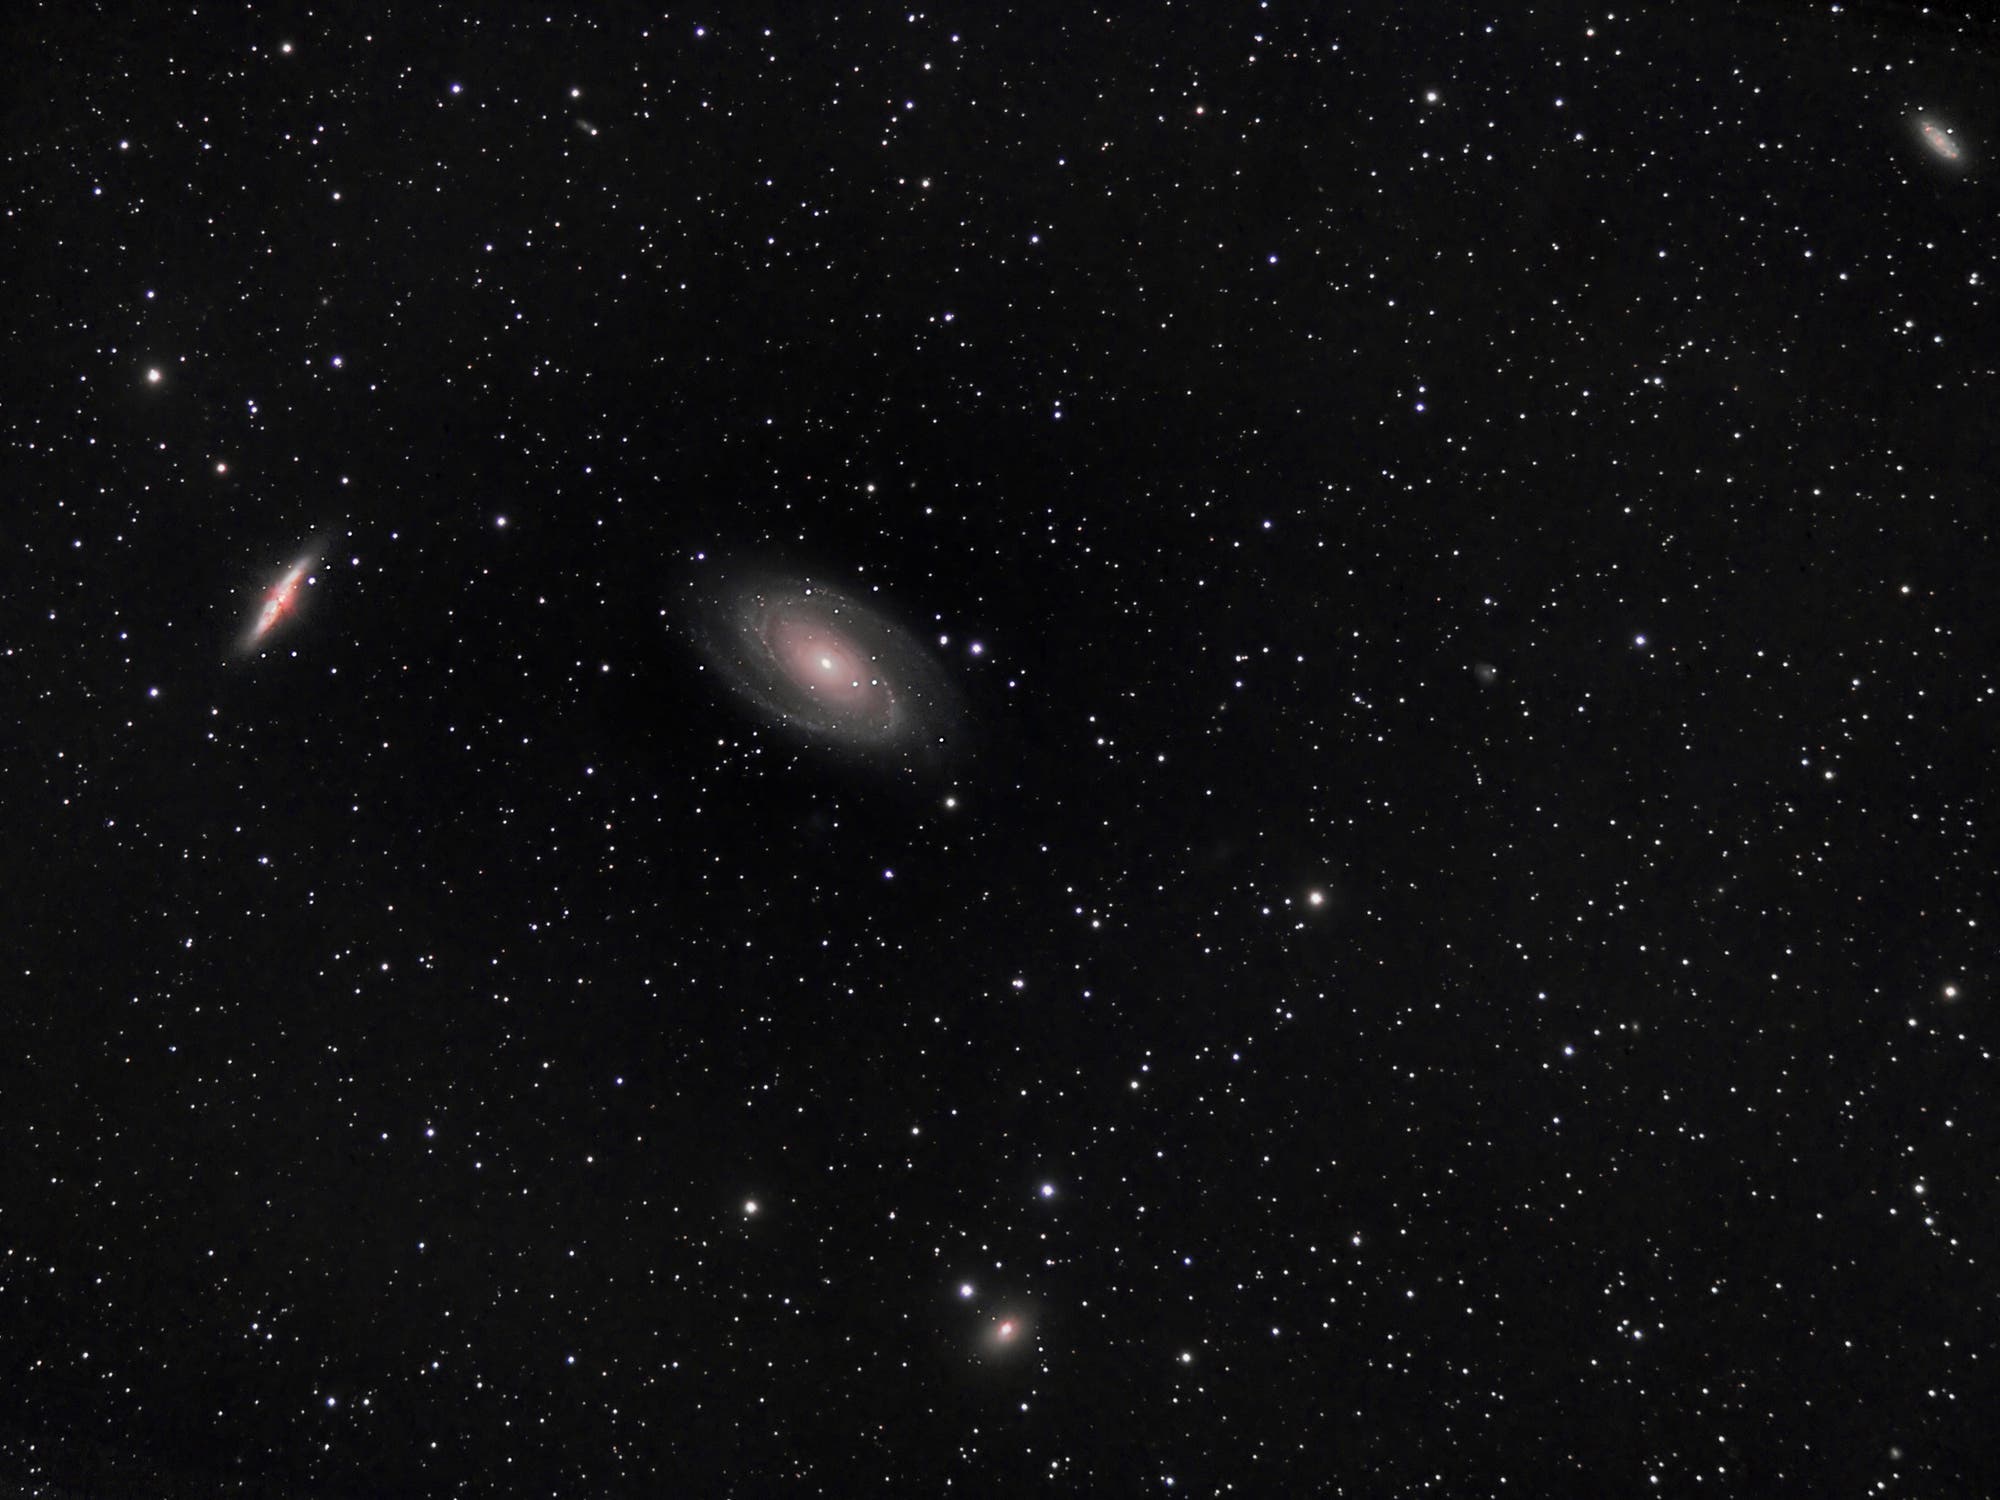 M81-Galaxiengruppe im Sternbild Ursa Major